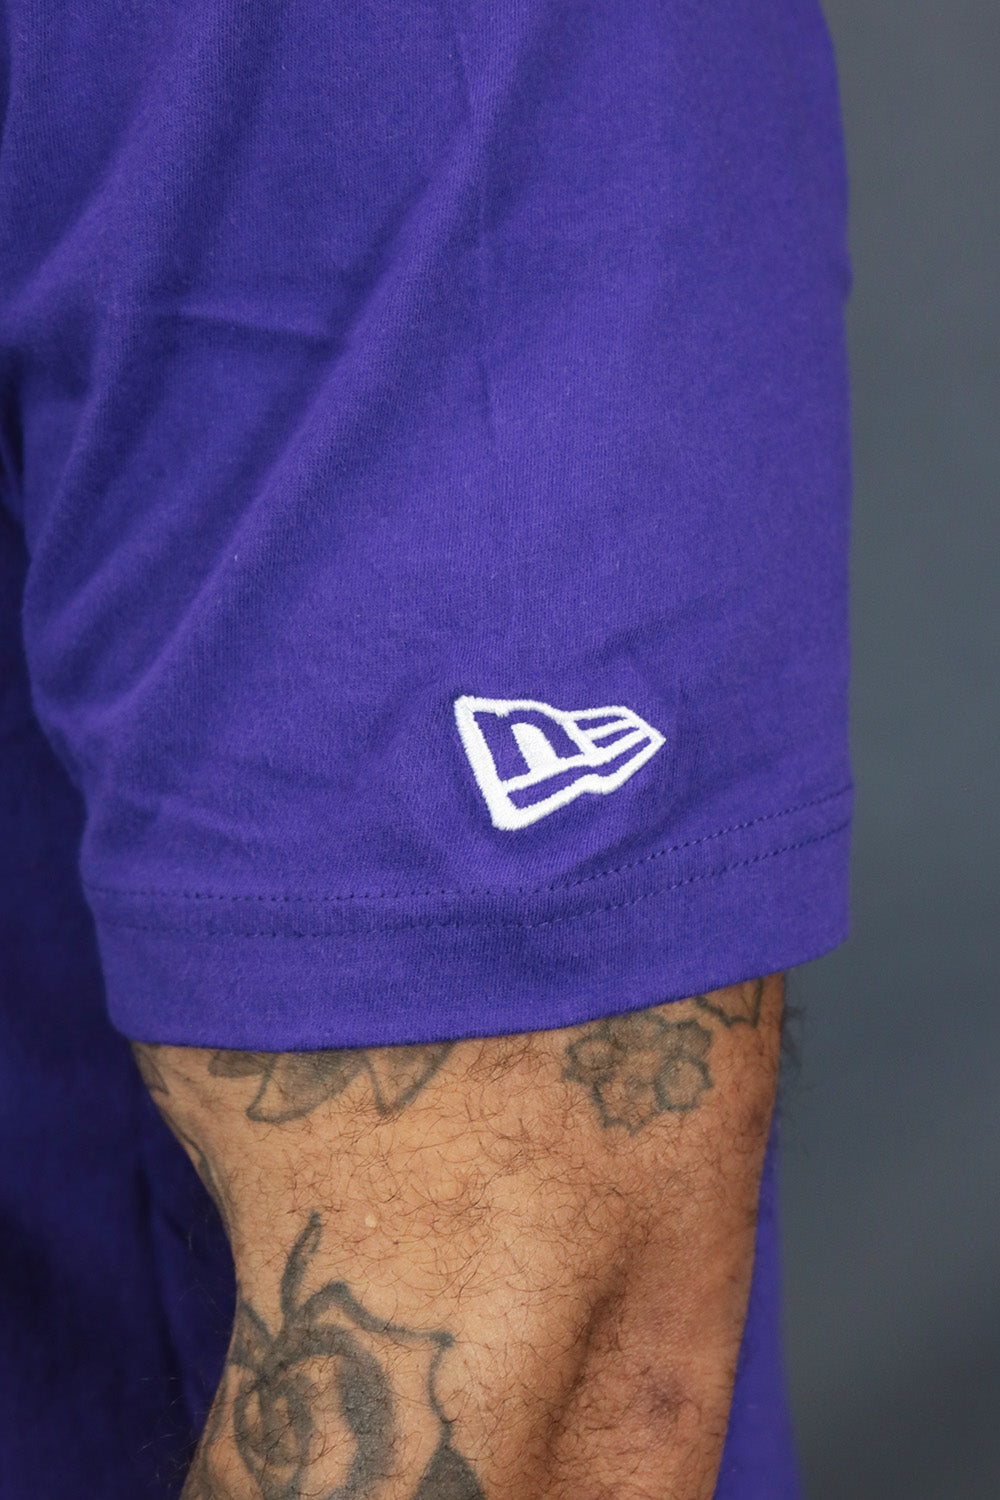 The wearer's right on the Arizona Diamondbacks State Flower Cooperstown Shirt | New Era Purple